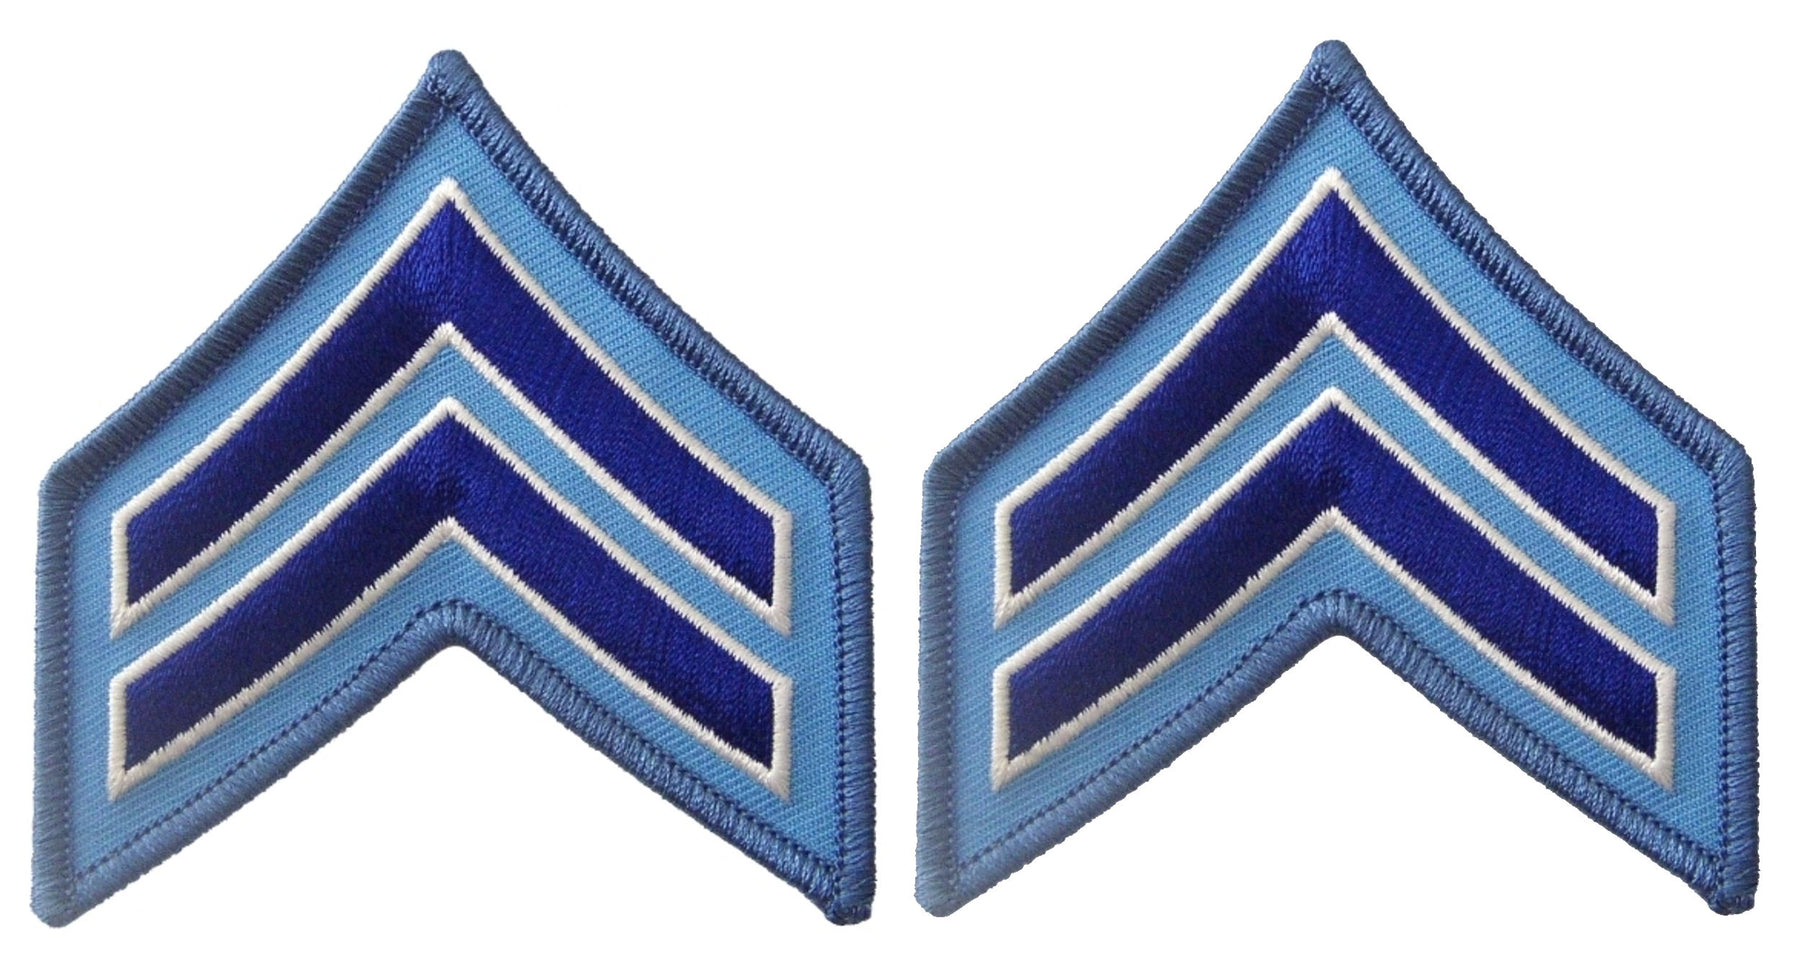 Corporal Chevrons - Chicago PD - Royal Blue White on Light Blue Merrowed Border